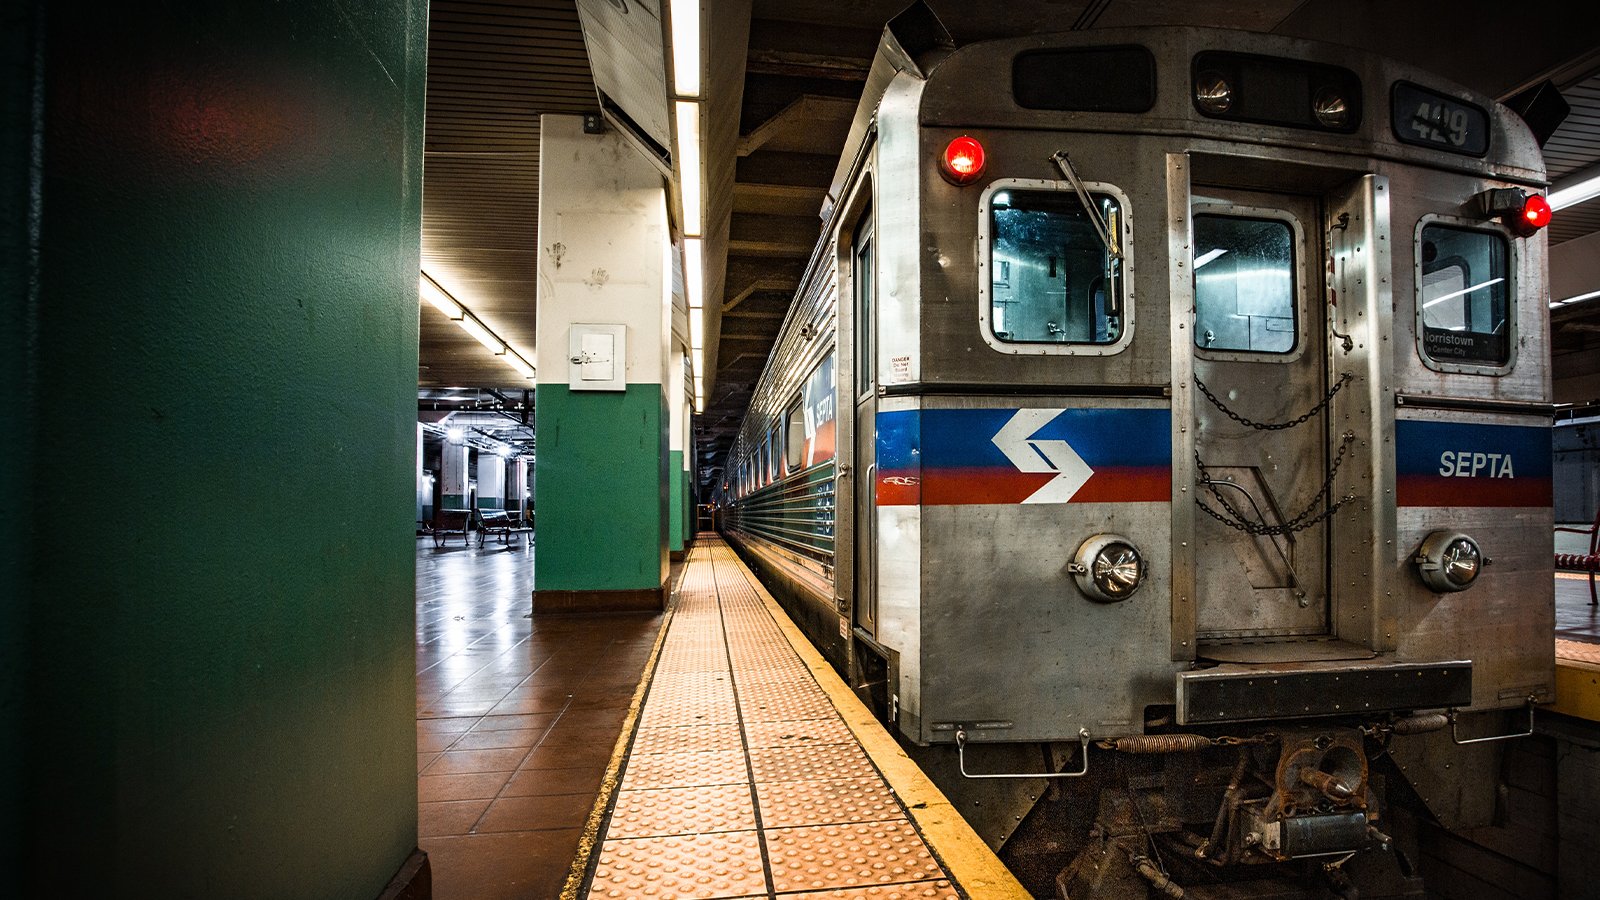 An image of a SEPTA train in Philadelphia